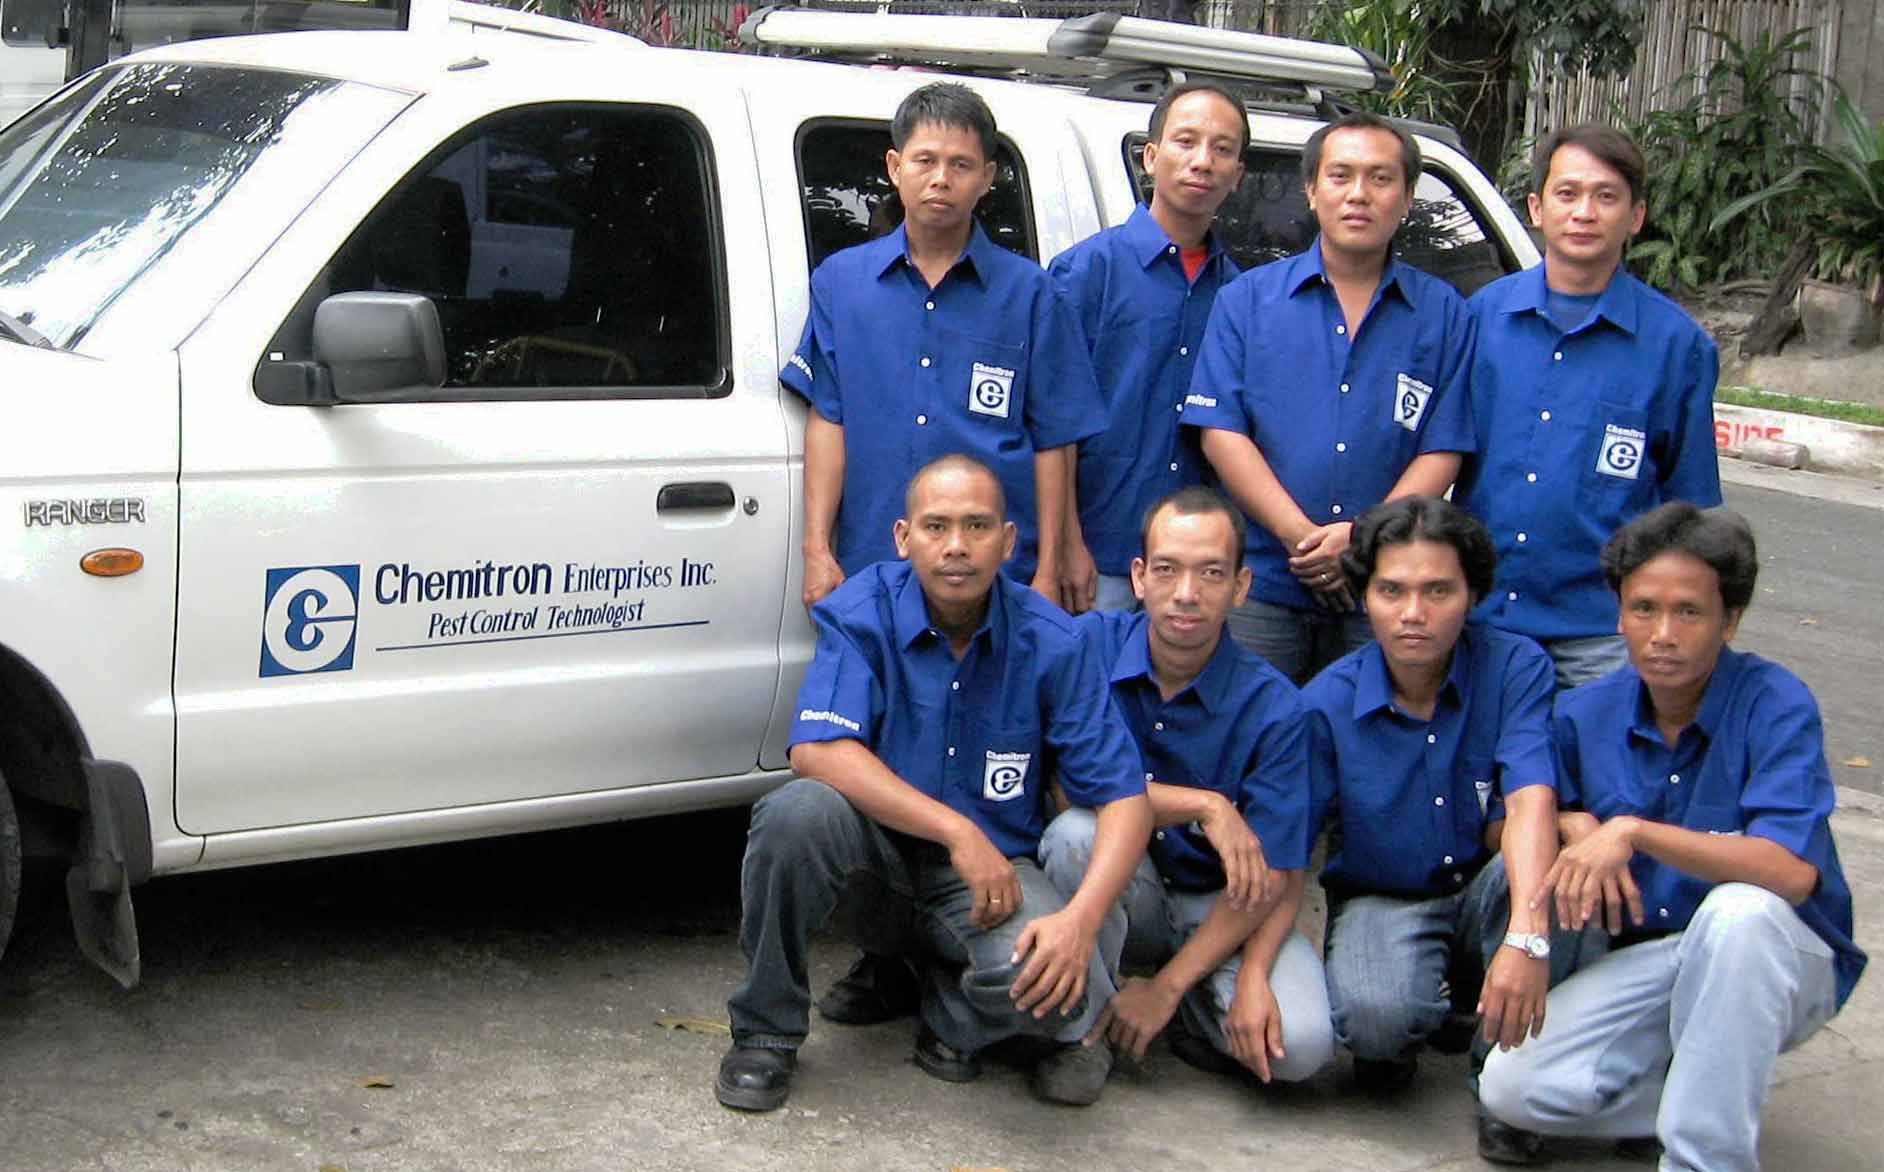 Chemitron technicians posing with company vehicle